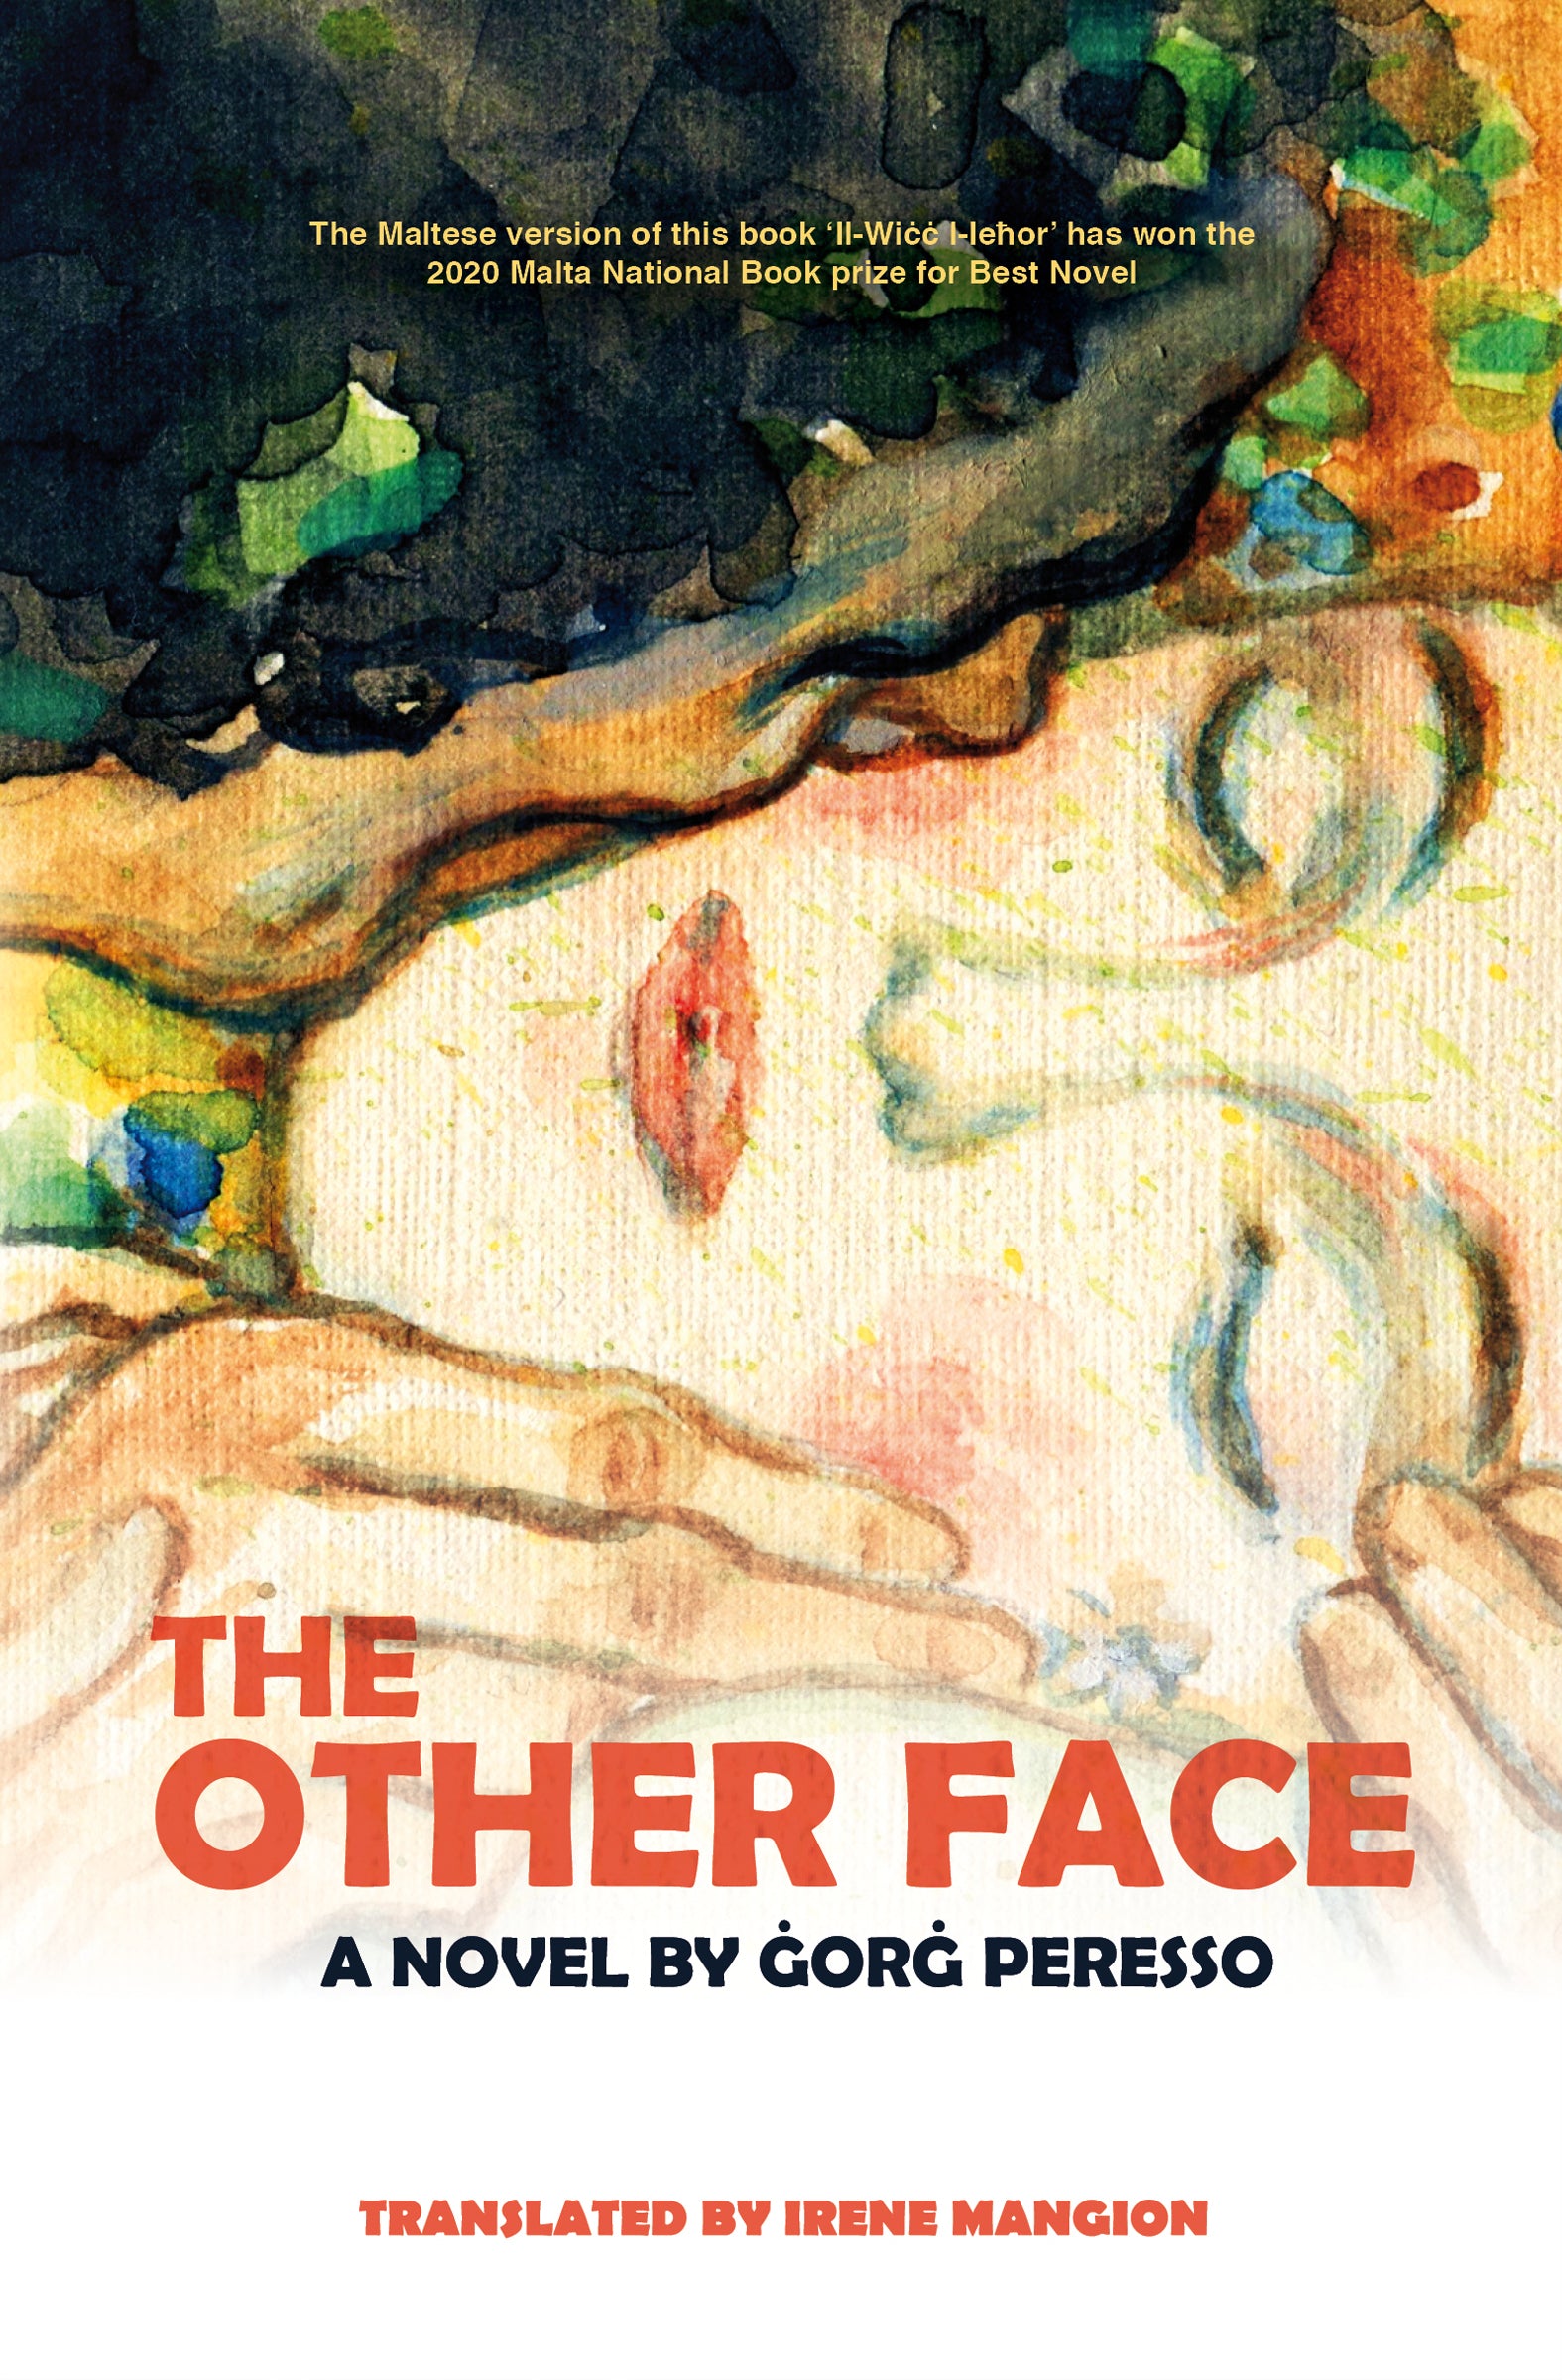 The Other face A Novel by Ġorġ Peresso - Agenda Bookshop